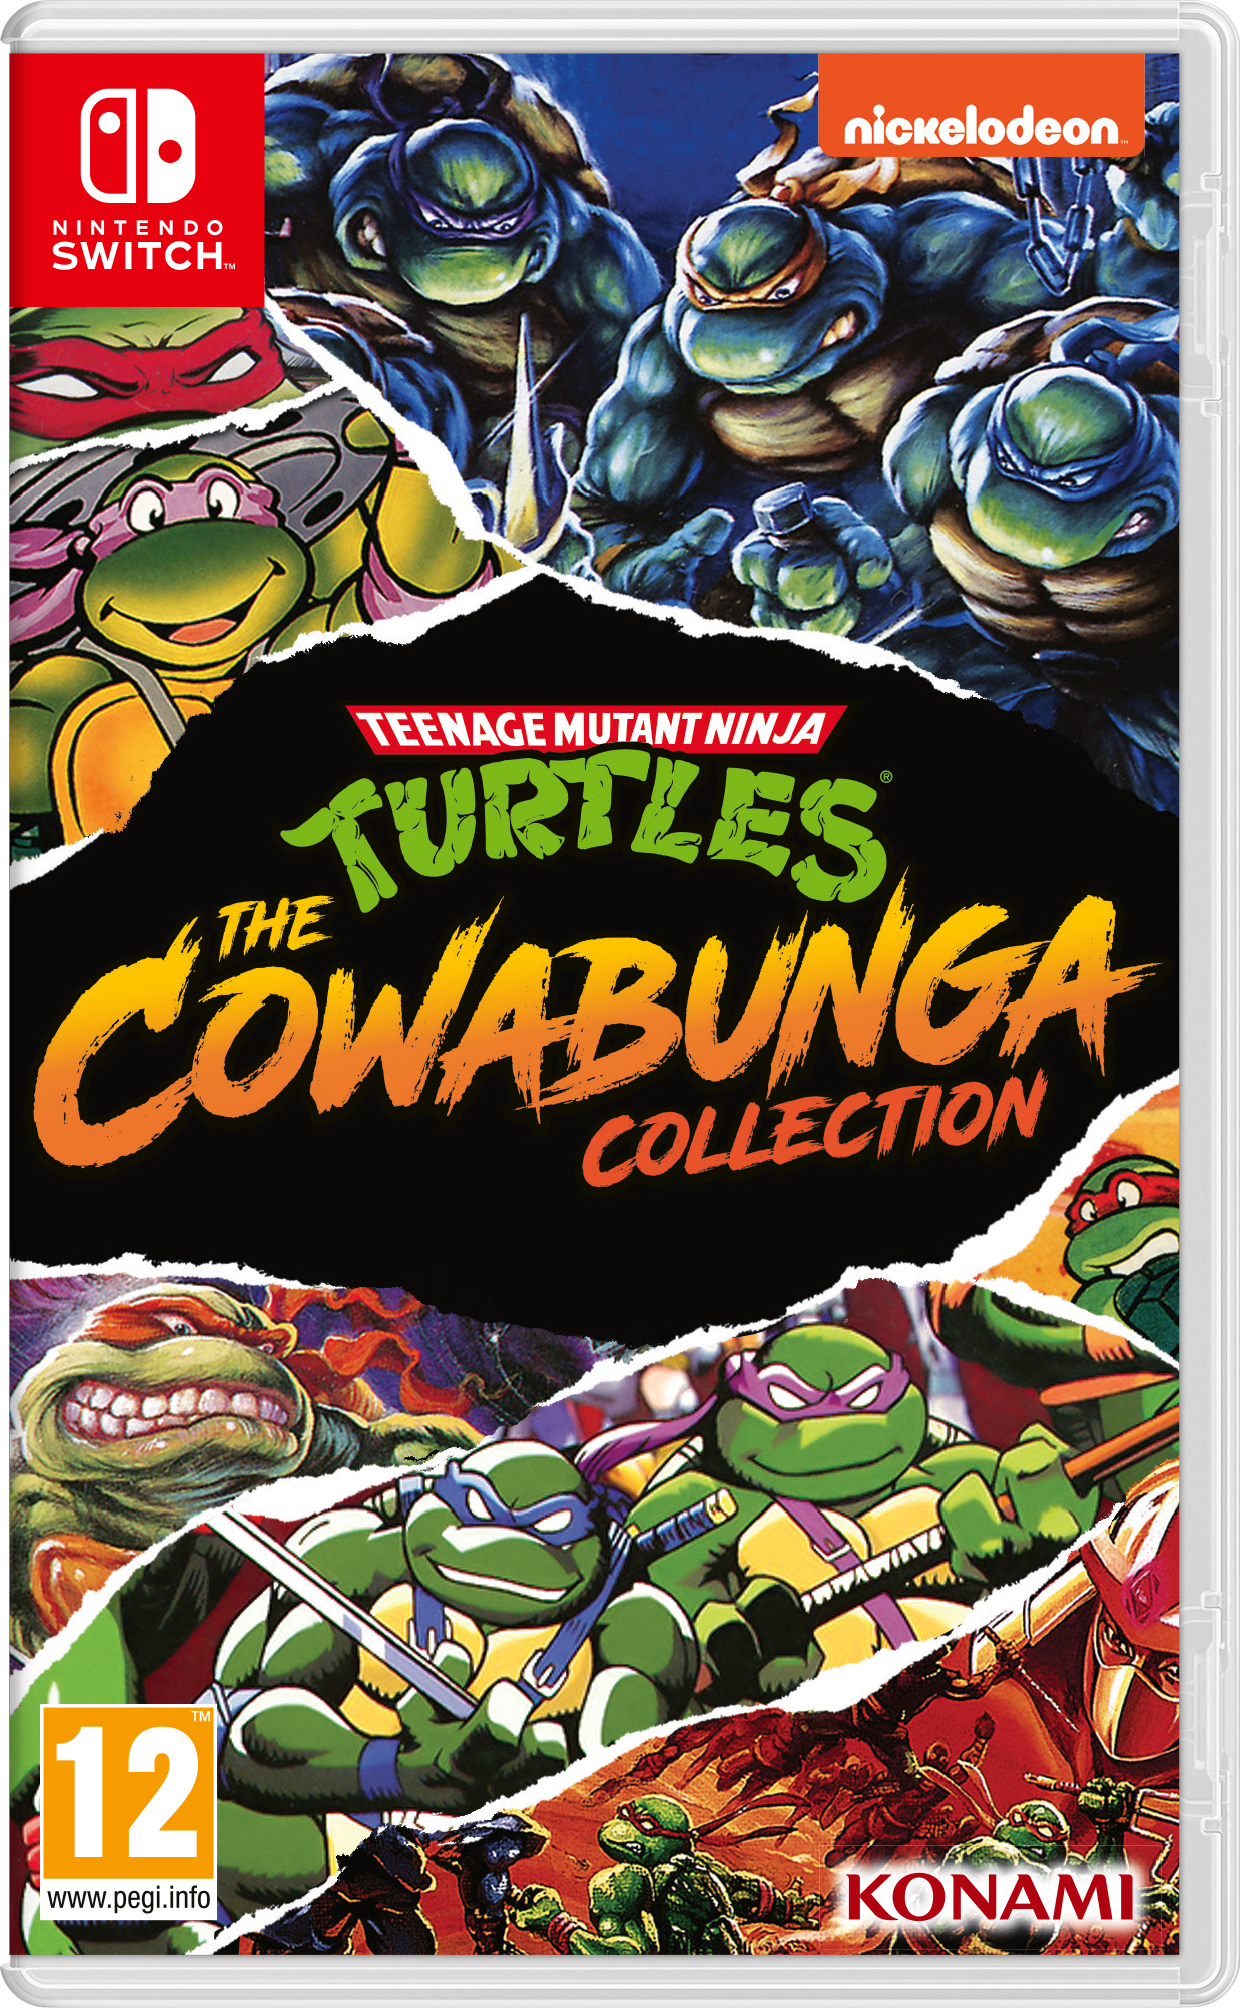 Mutant ninja turtles cowabunga collection. Нинтендо свитч ниндзя. TMNT: the Cowabunga collection на Nintendo Switch. Teenage Mutant Ninja Turtles: the Cowabunga. Черепашки ниндзя на Нинтендо свитч.